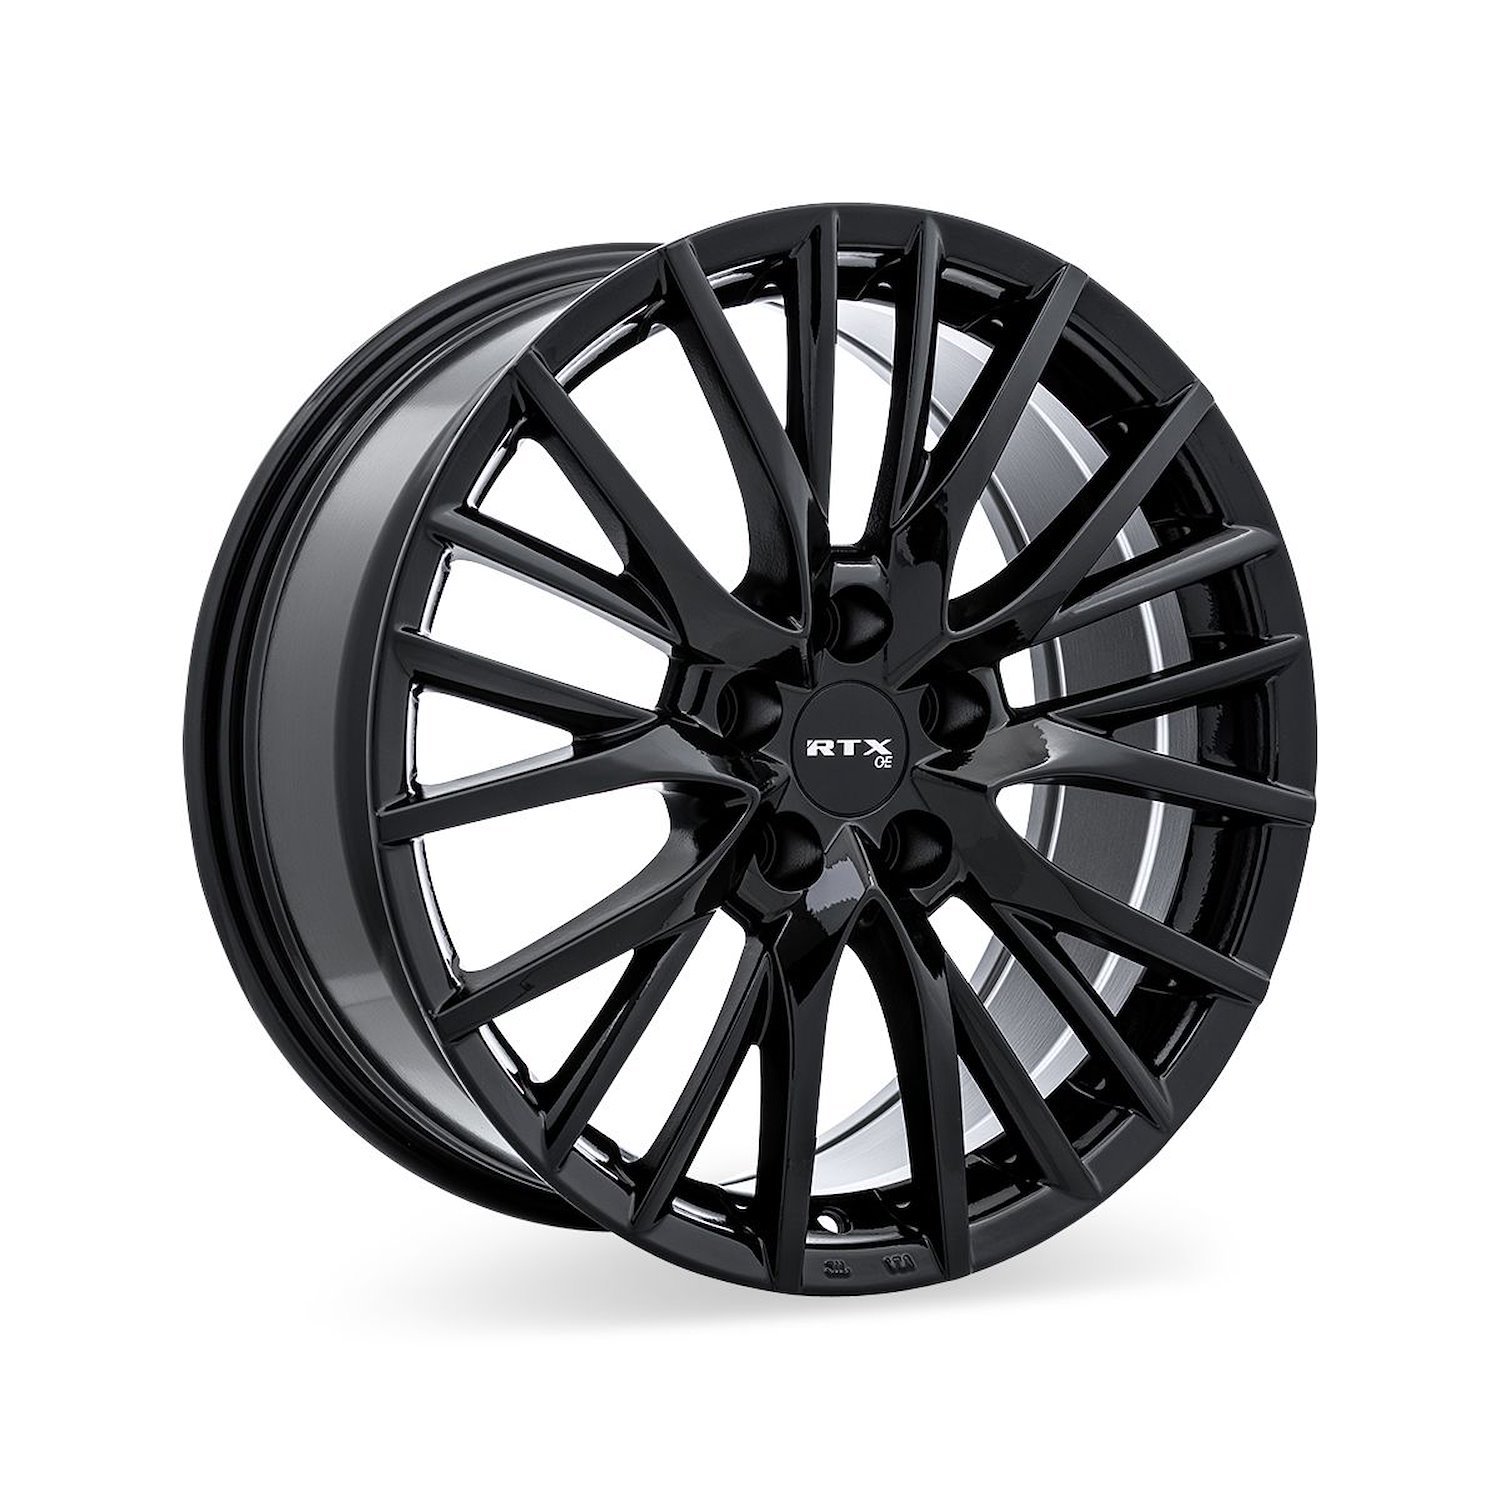 083091 OE-Series Kyo Wheel [Size: 20" x 8"] Gloss Black Finish